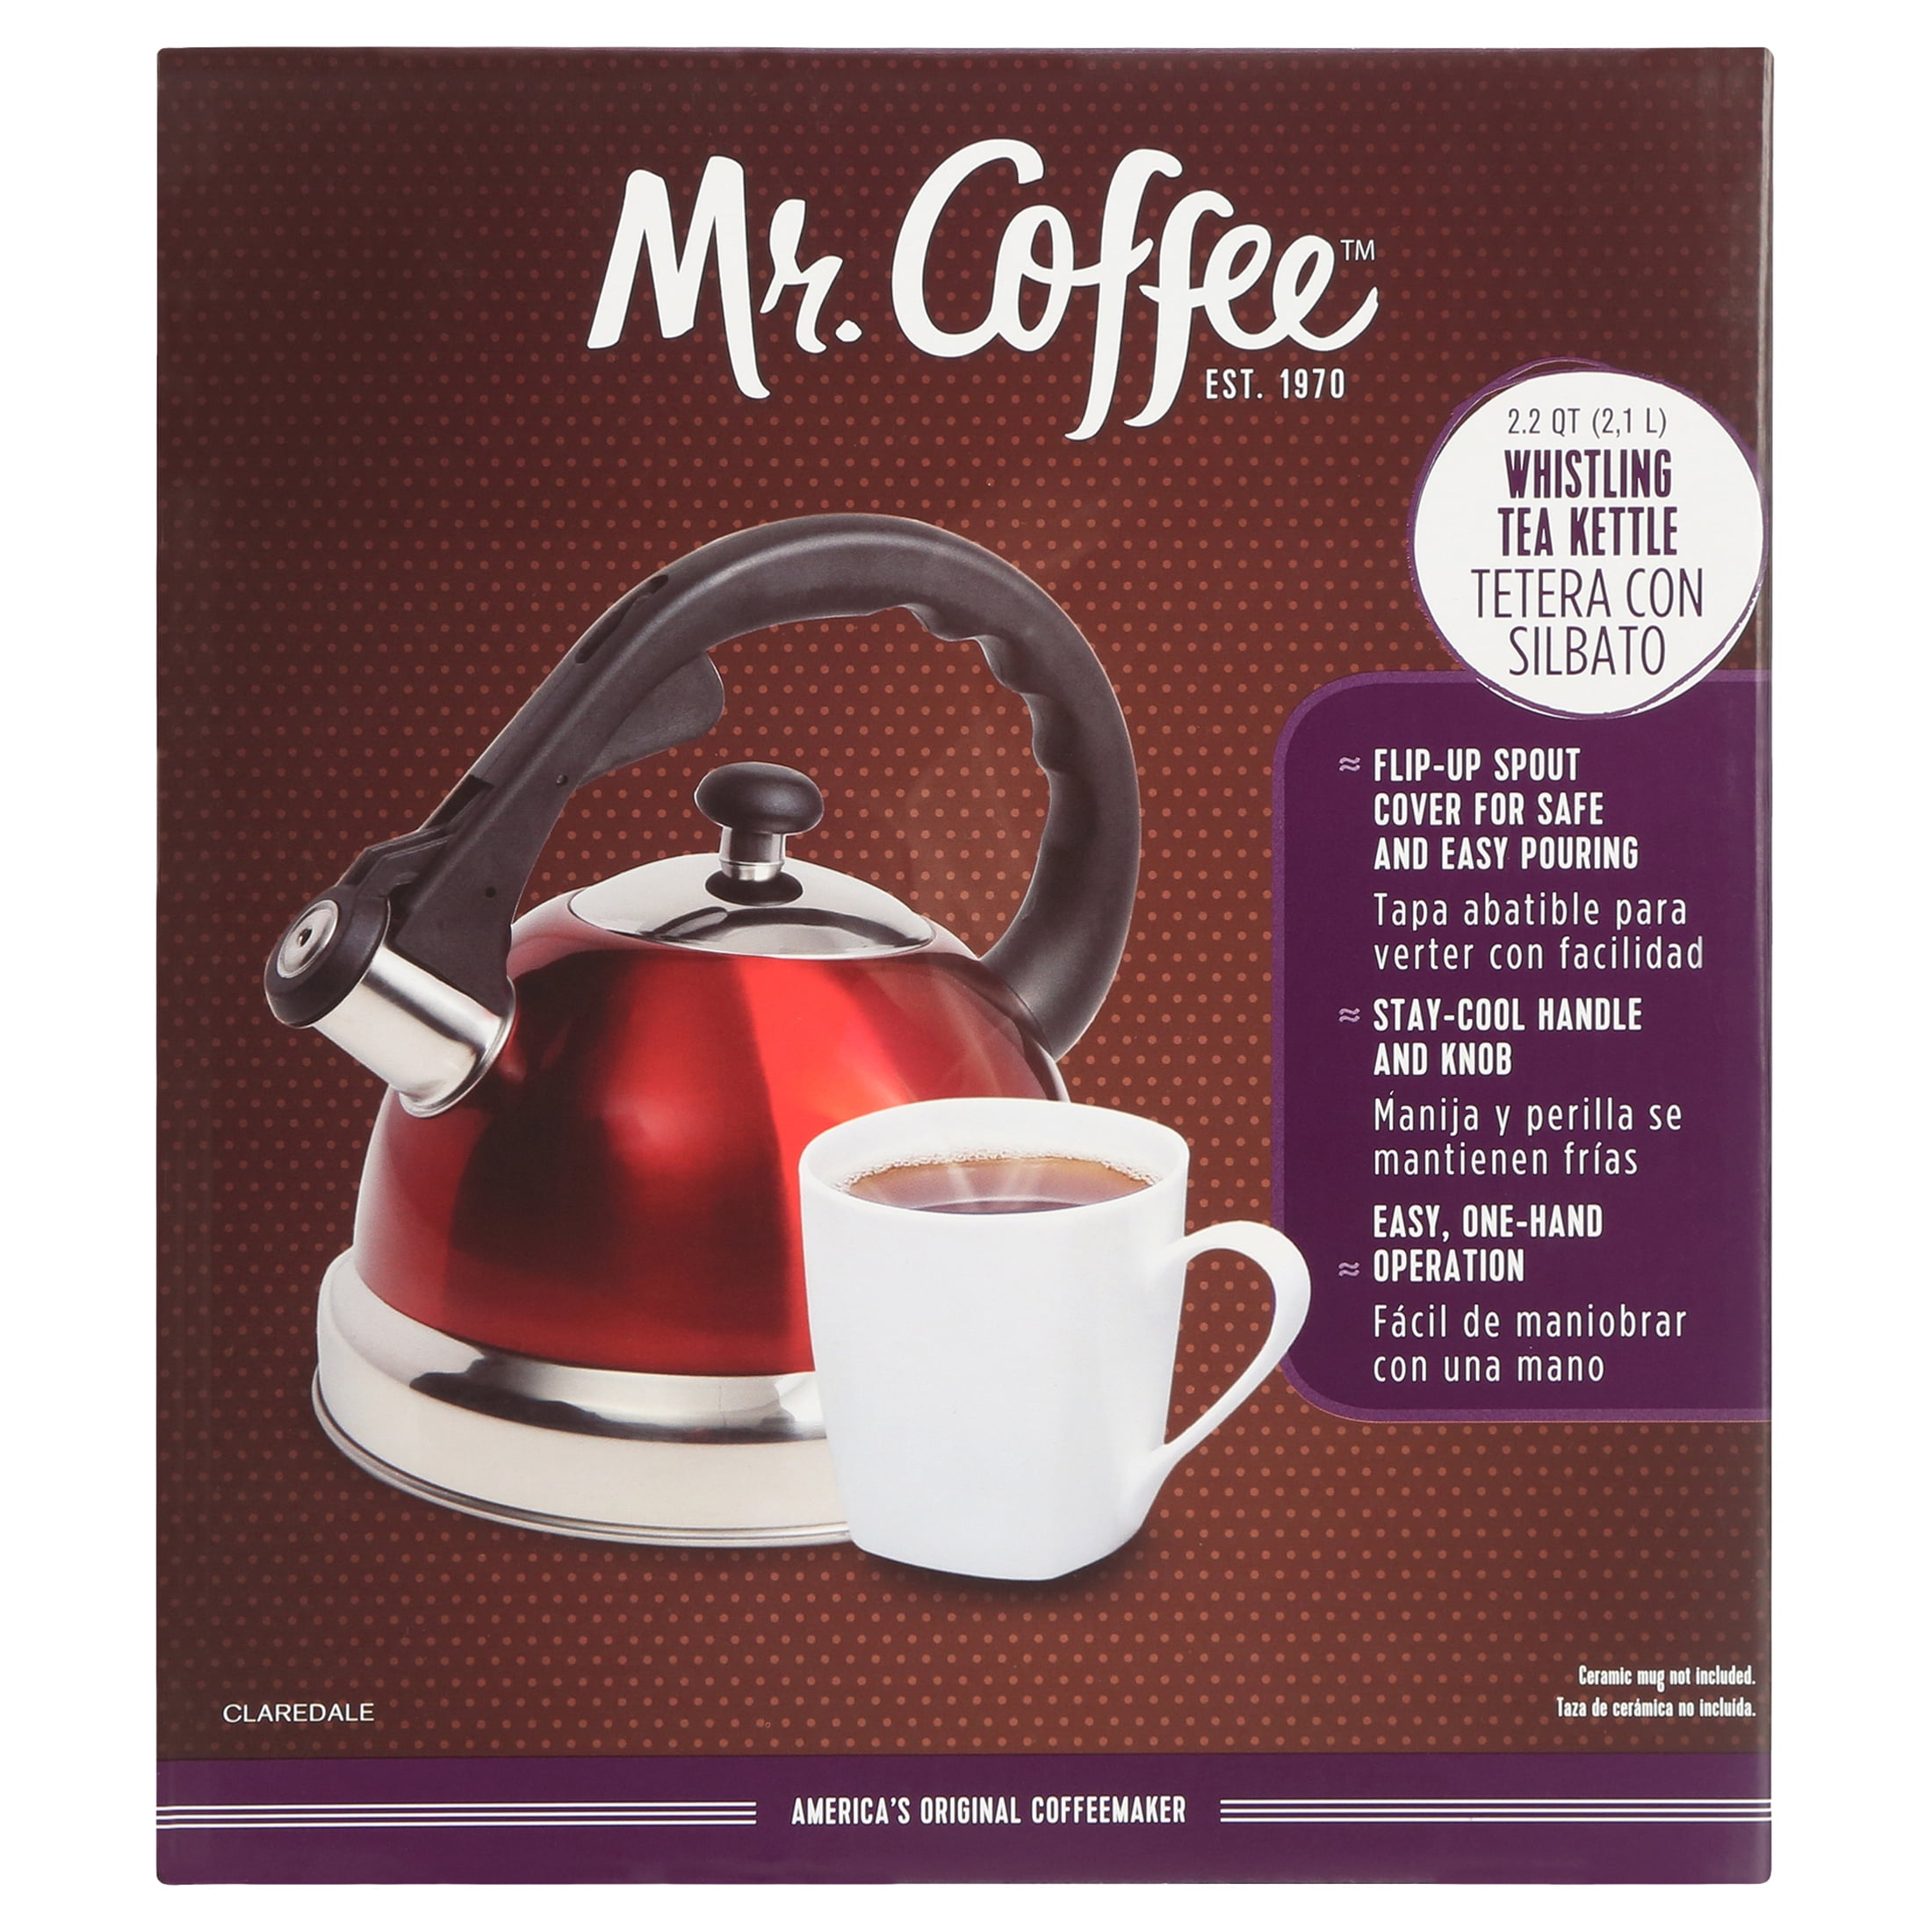 Mr. Coffee 1.8 Quart Morbern Tea Kettle in Red